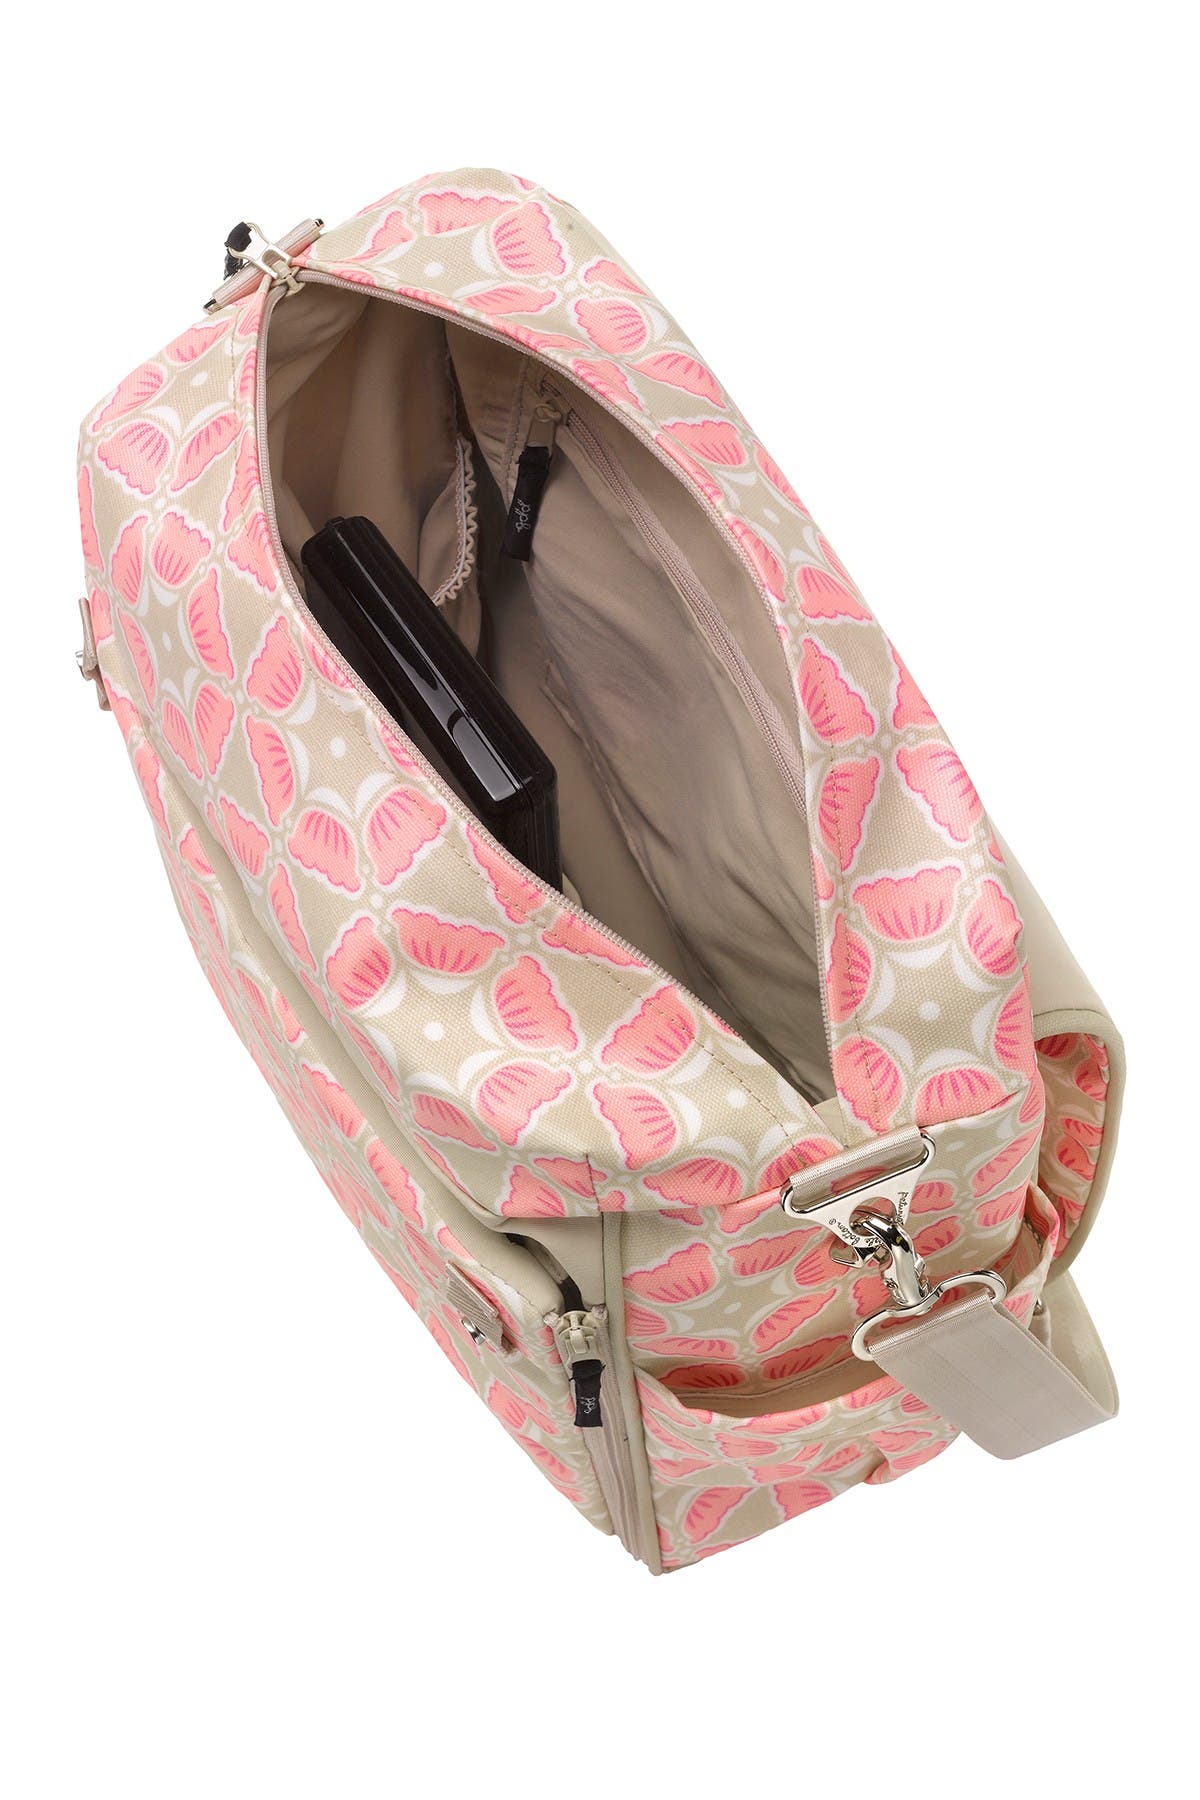 Petunia Pickle Bottom Boxy Backpack Diaper Bag In Blooming Brixham